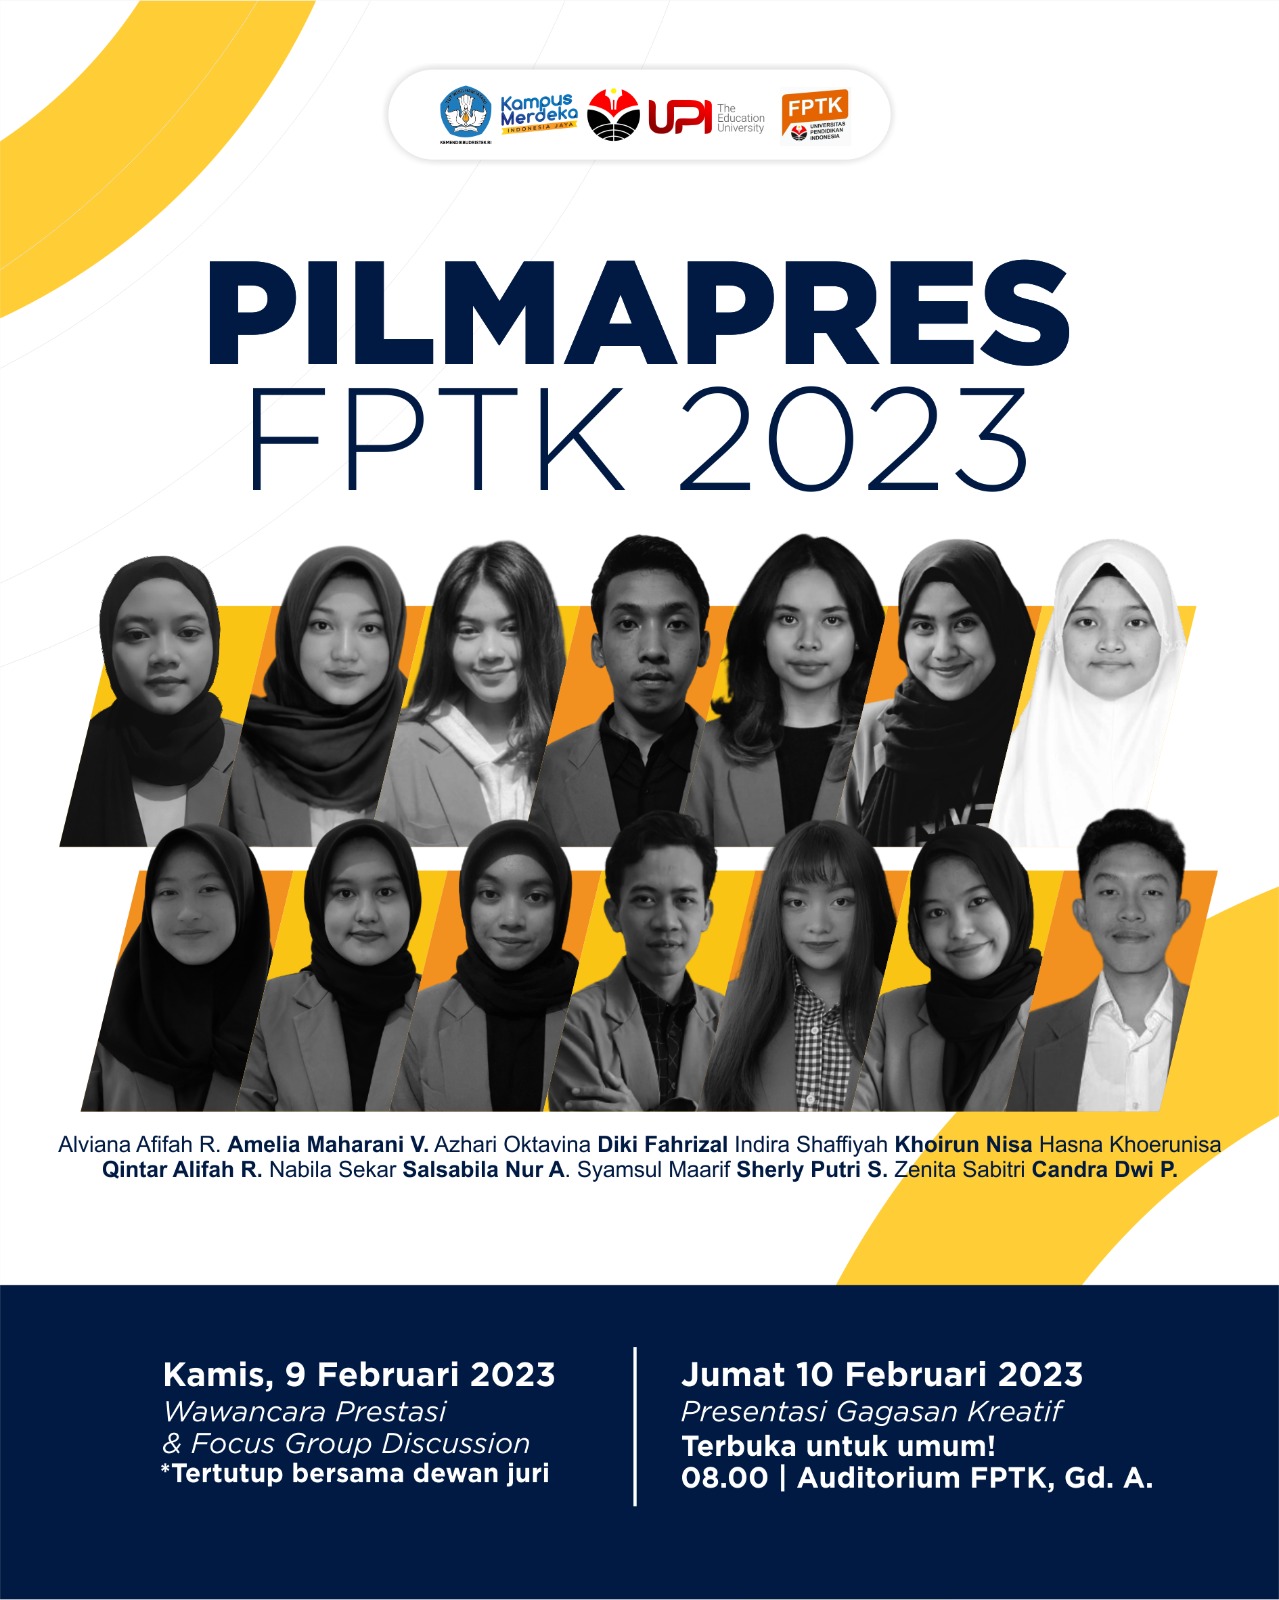 Pelaksanaan Pilmapres FPTK 2023